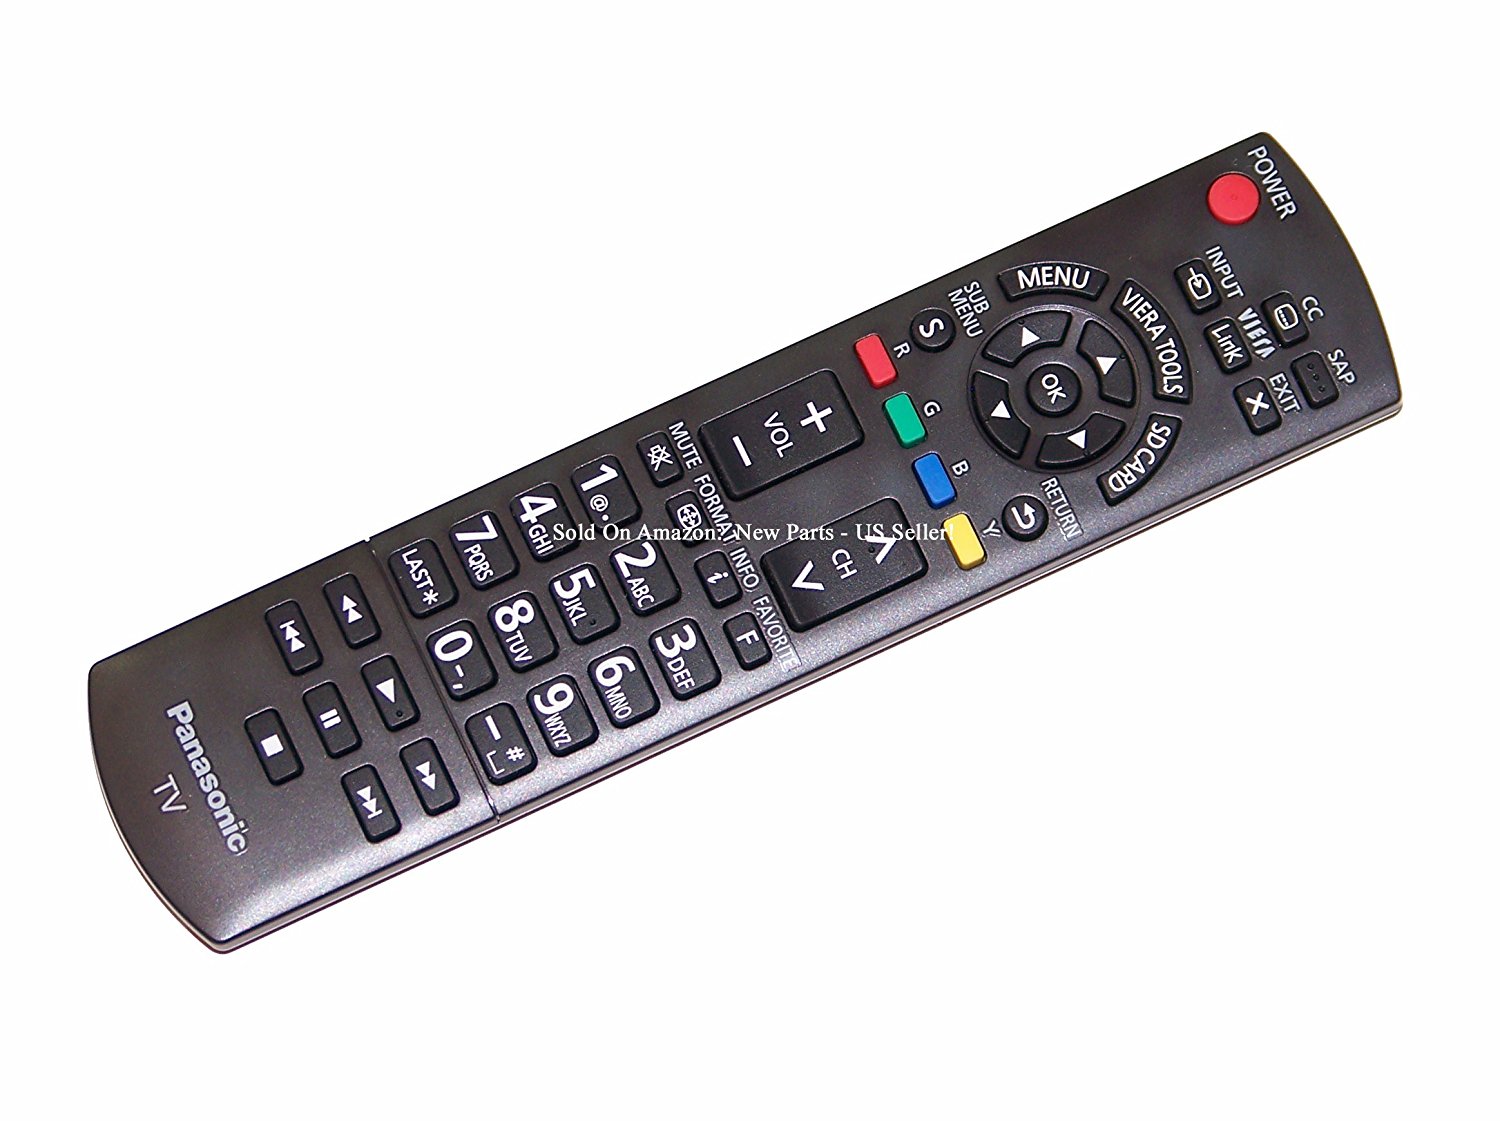 Panasonic Remote Control For Tc 50px34 Tc P42s30 Tc P42x3 Tc P46s30 Tc P46st30 Tc P46x3 Tc 5905